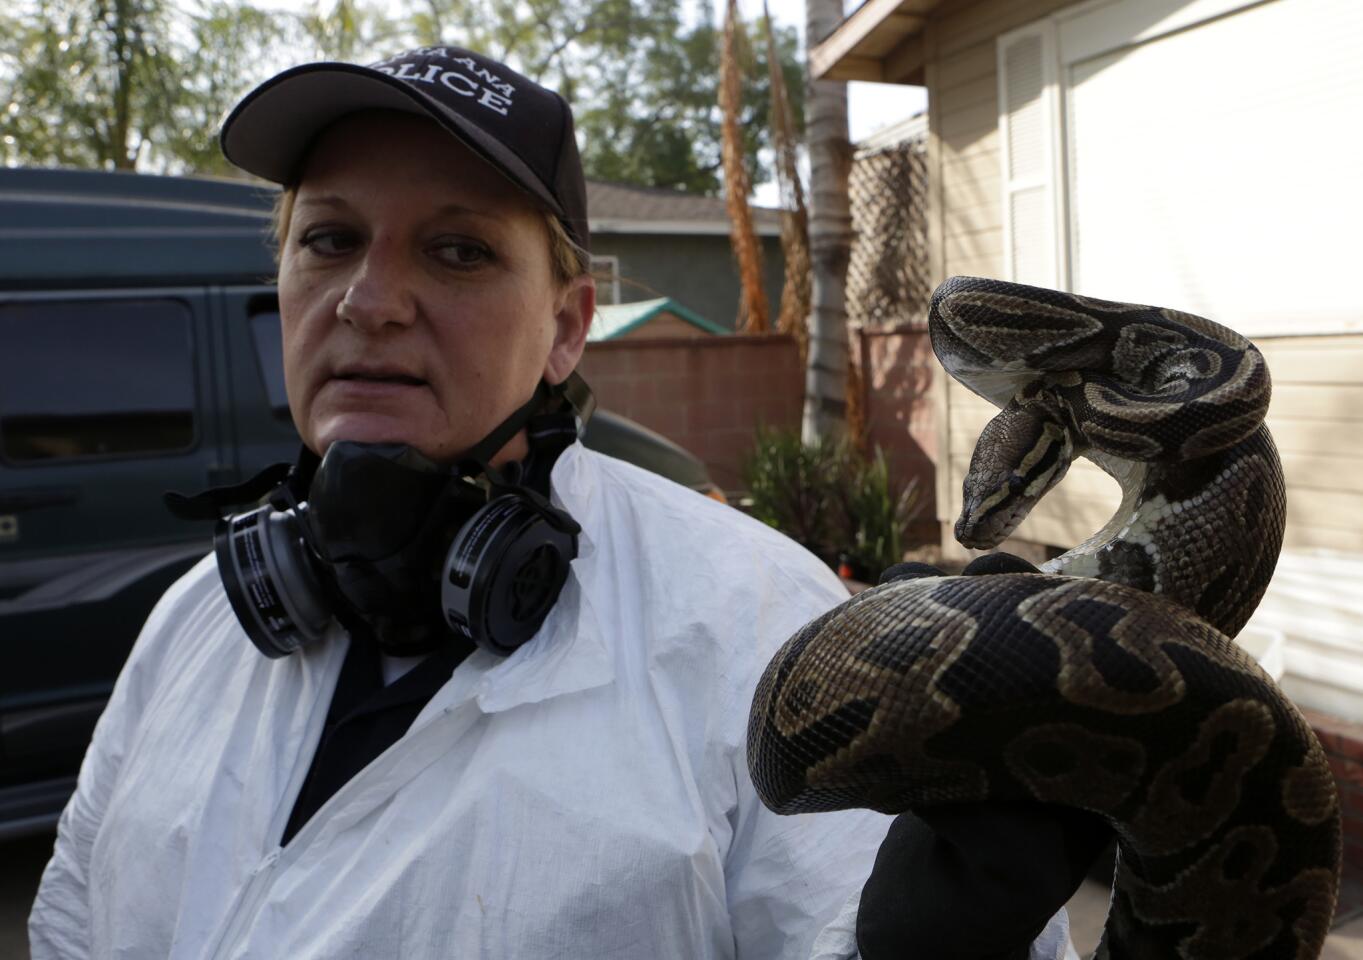 Snakes found in Santa Ana home